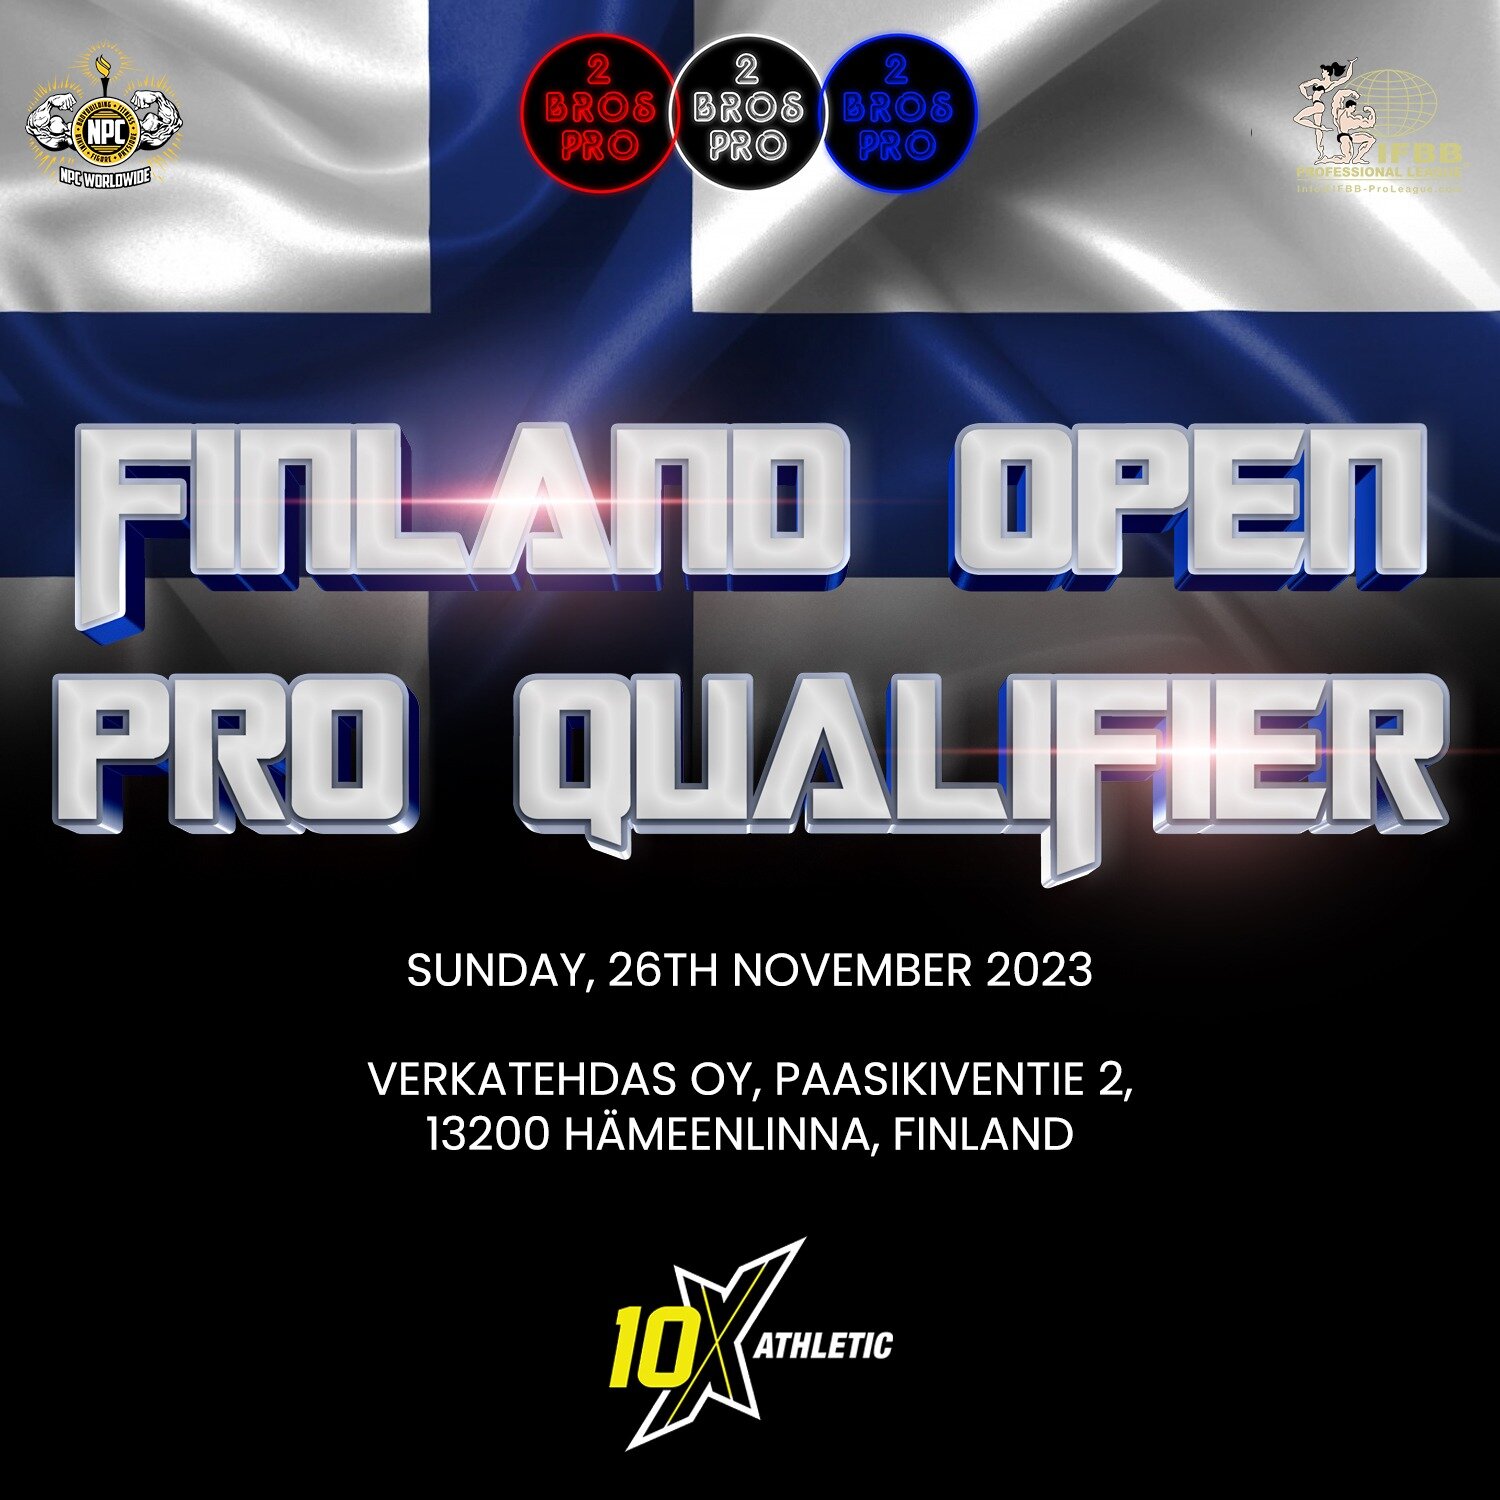 NPC Pro Qualifier Finland (FI)